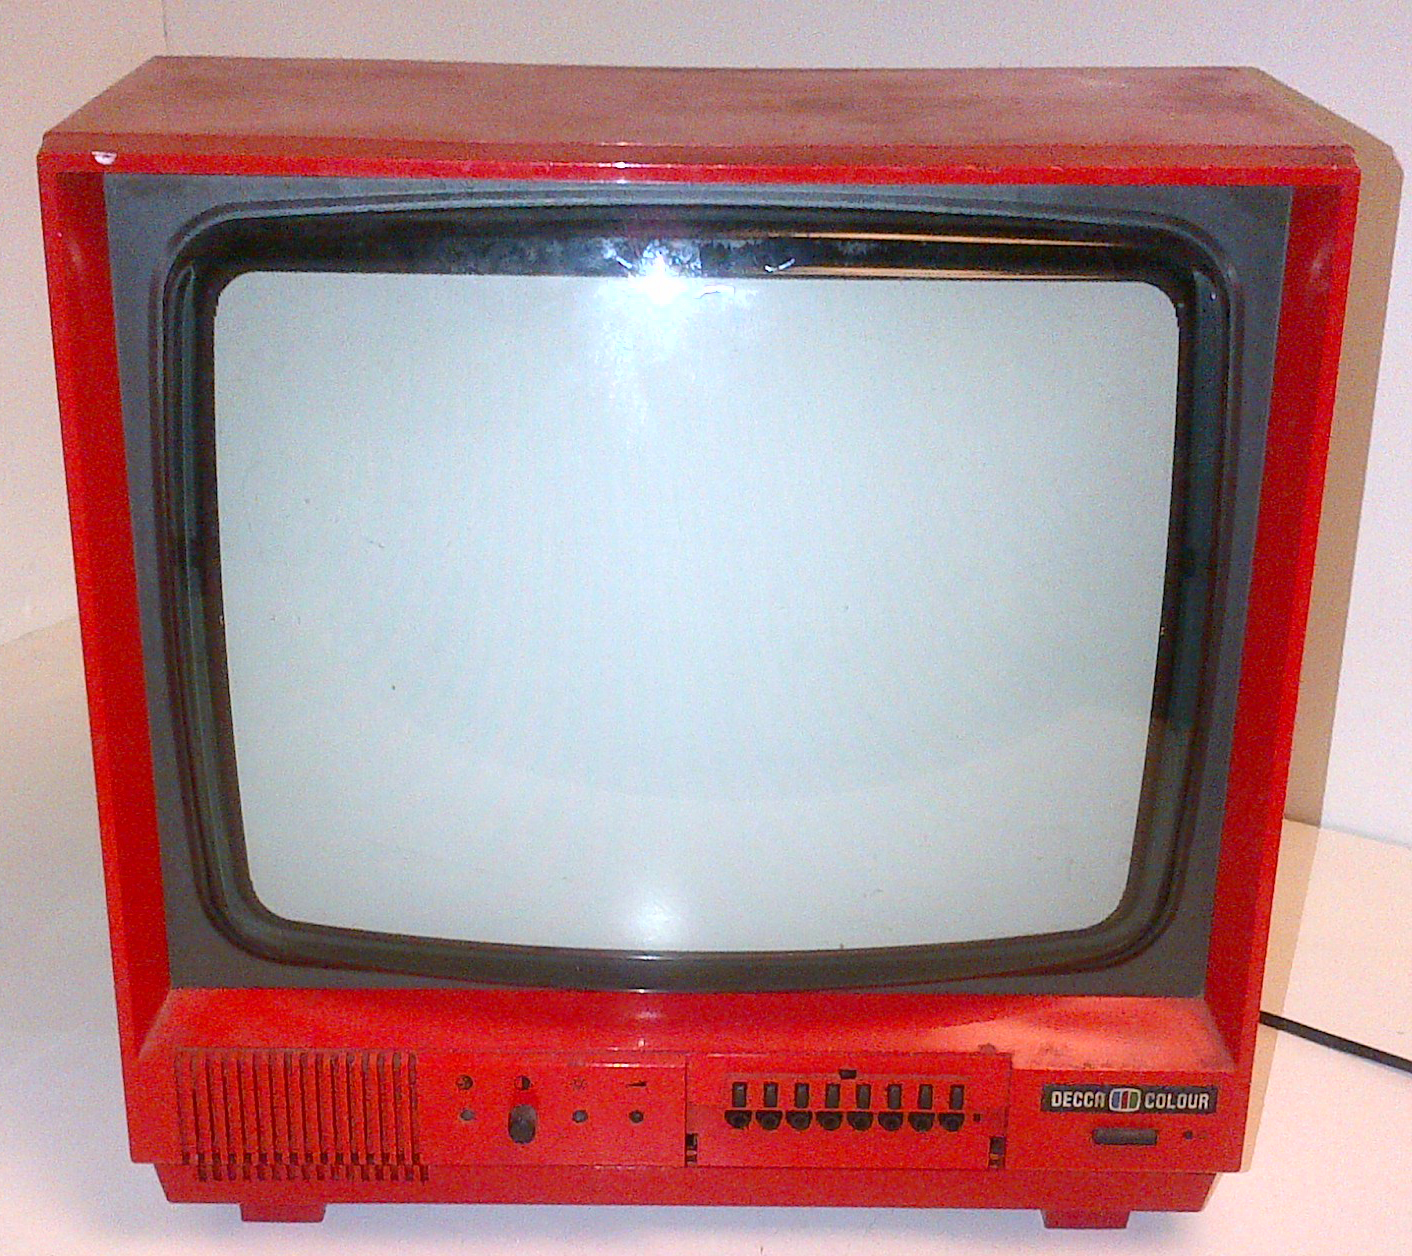 Retro Television